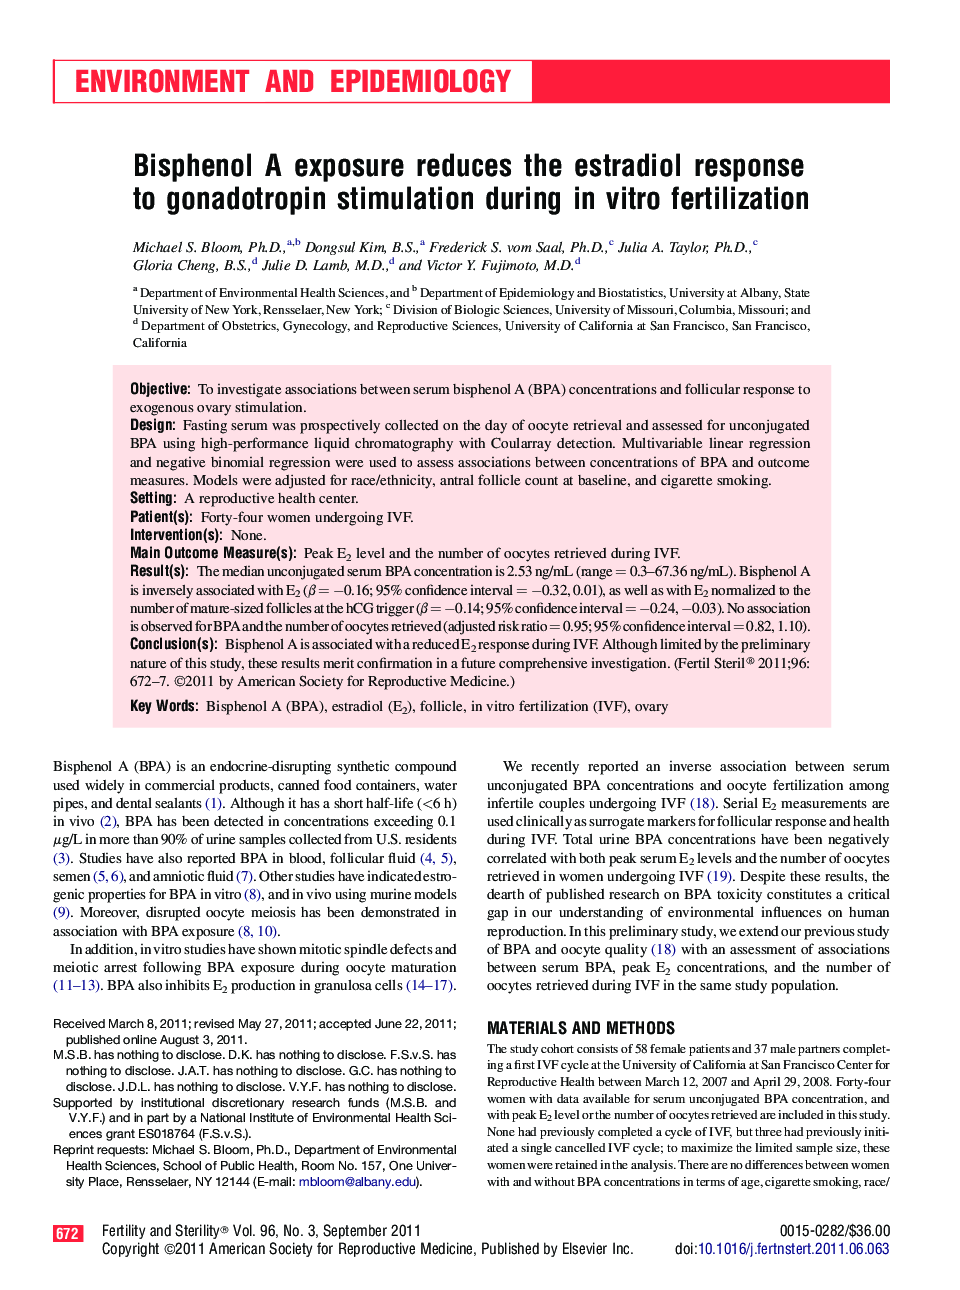 Bisphenol A exposure reduces the estradiol response to gonadotropin stimulation during inÂ vitro fertilization